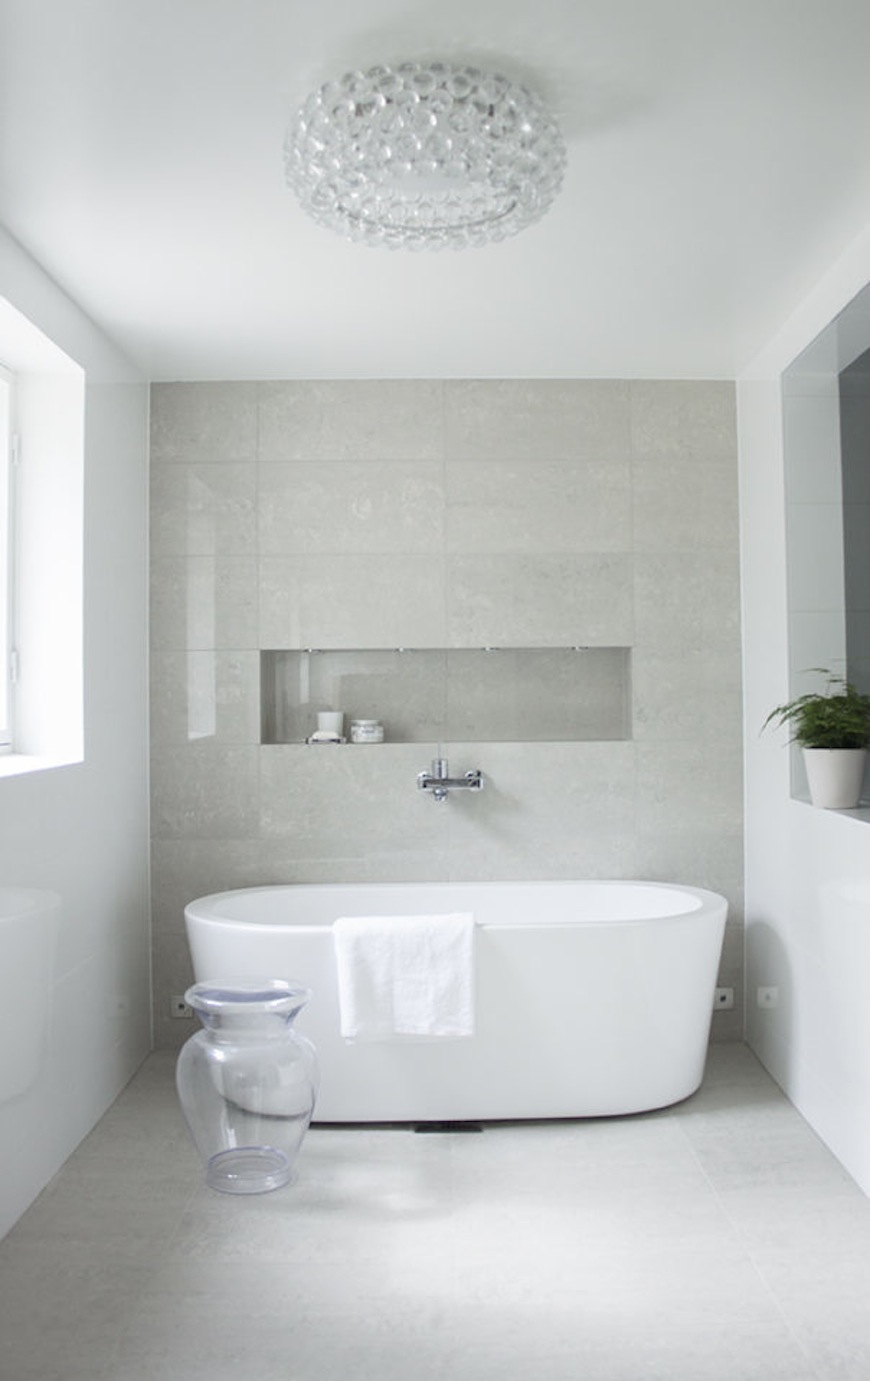 Amazing Luxury Bathroom Ideas by Helen Green ➤To see more Luxury Bathroom ideas visit us at www.luxurybathrooms.eu #luxurybathrooms #homedecorideas #bathroomideas @BathroomsLuxury